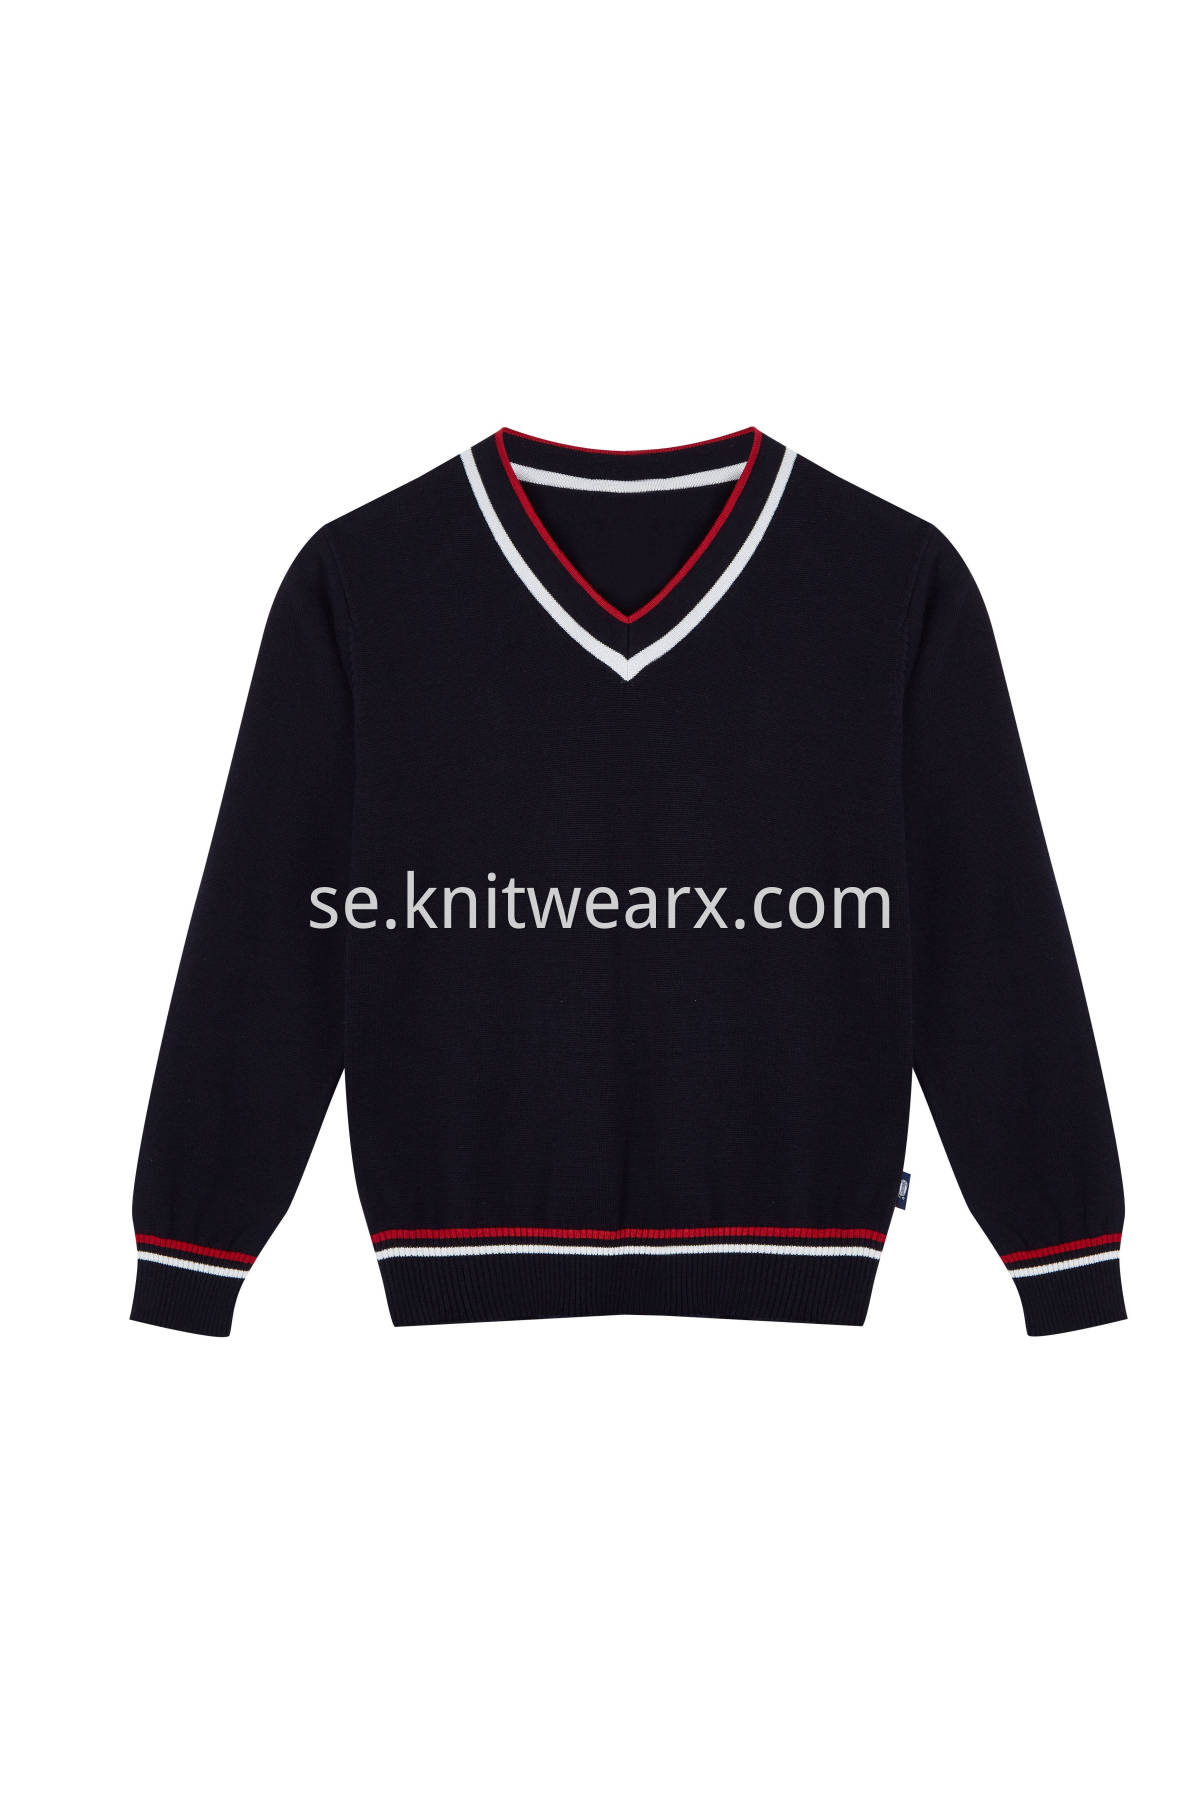 Kids's Sweater Stylish Vest Cotton V-Neck School Uniform Button Cardigan